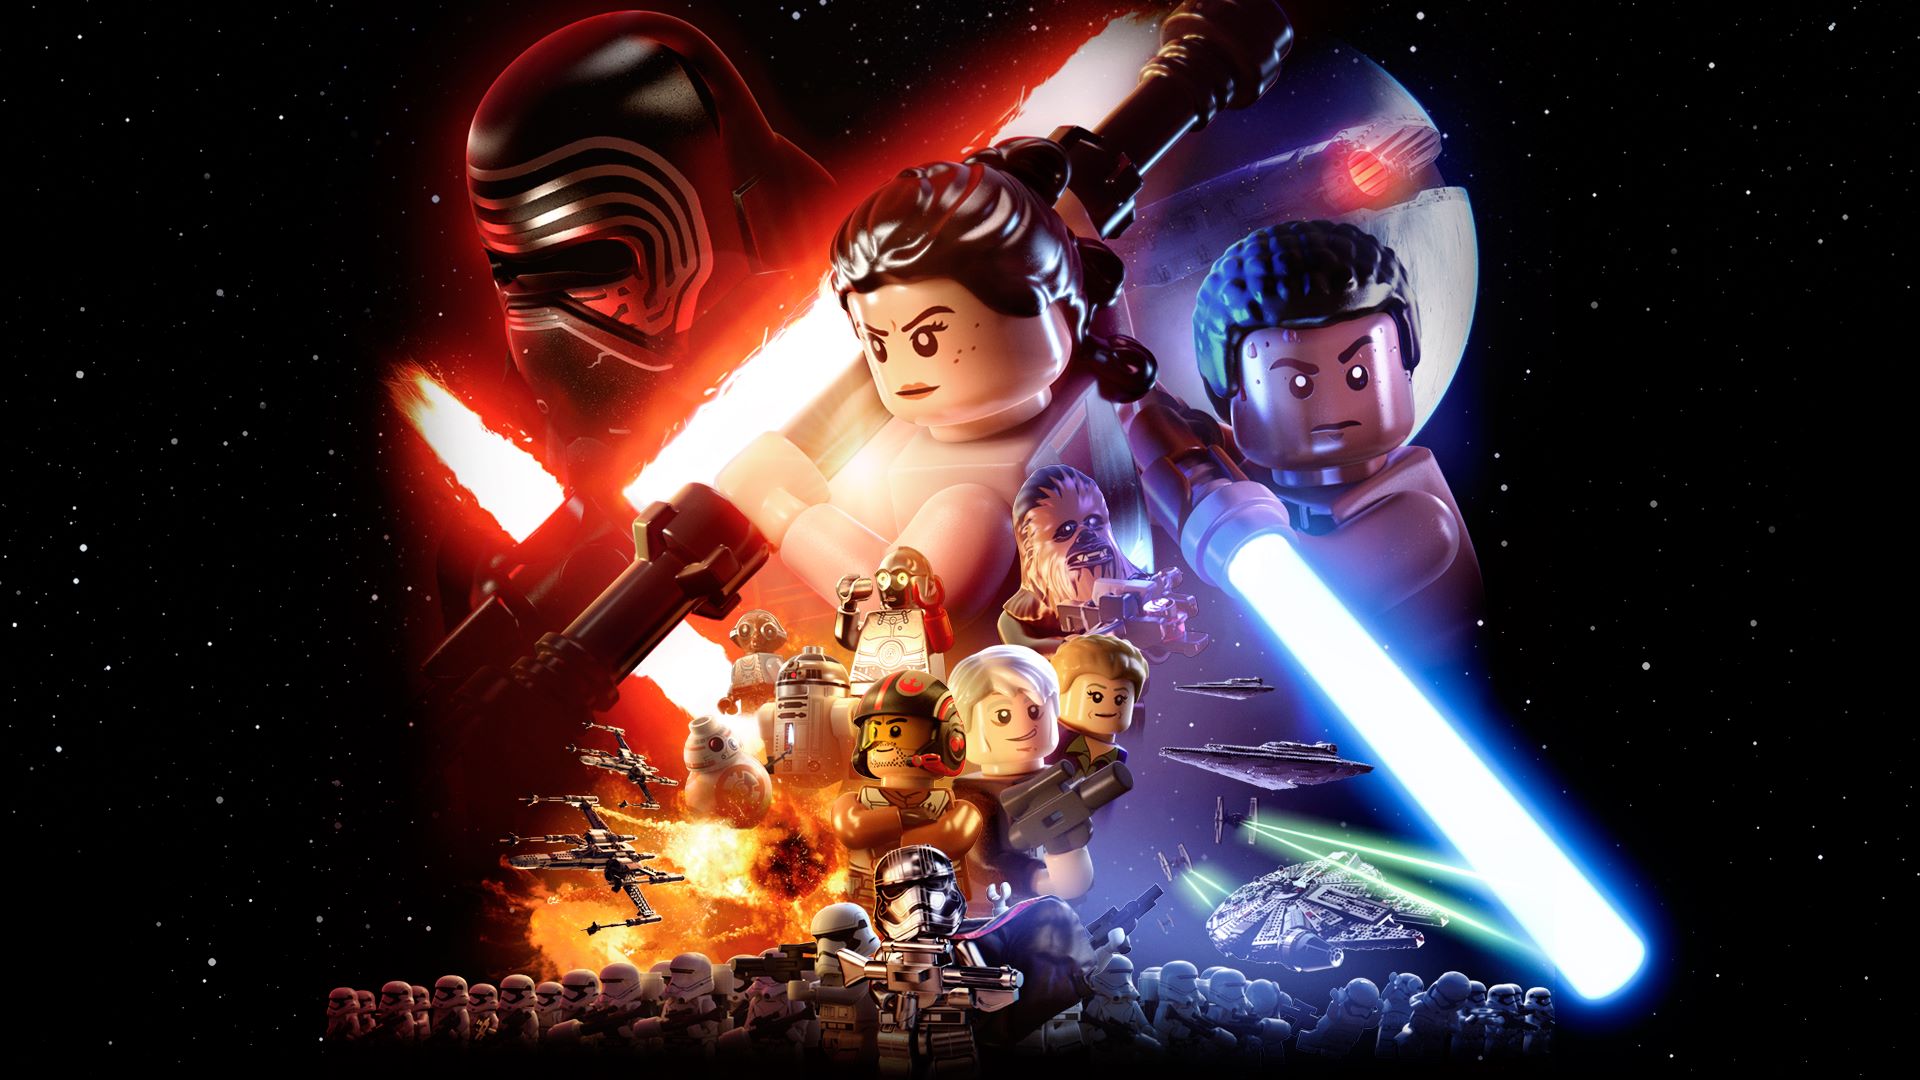 lego star wars the force awakens achievements